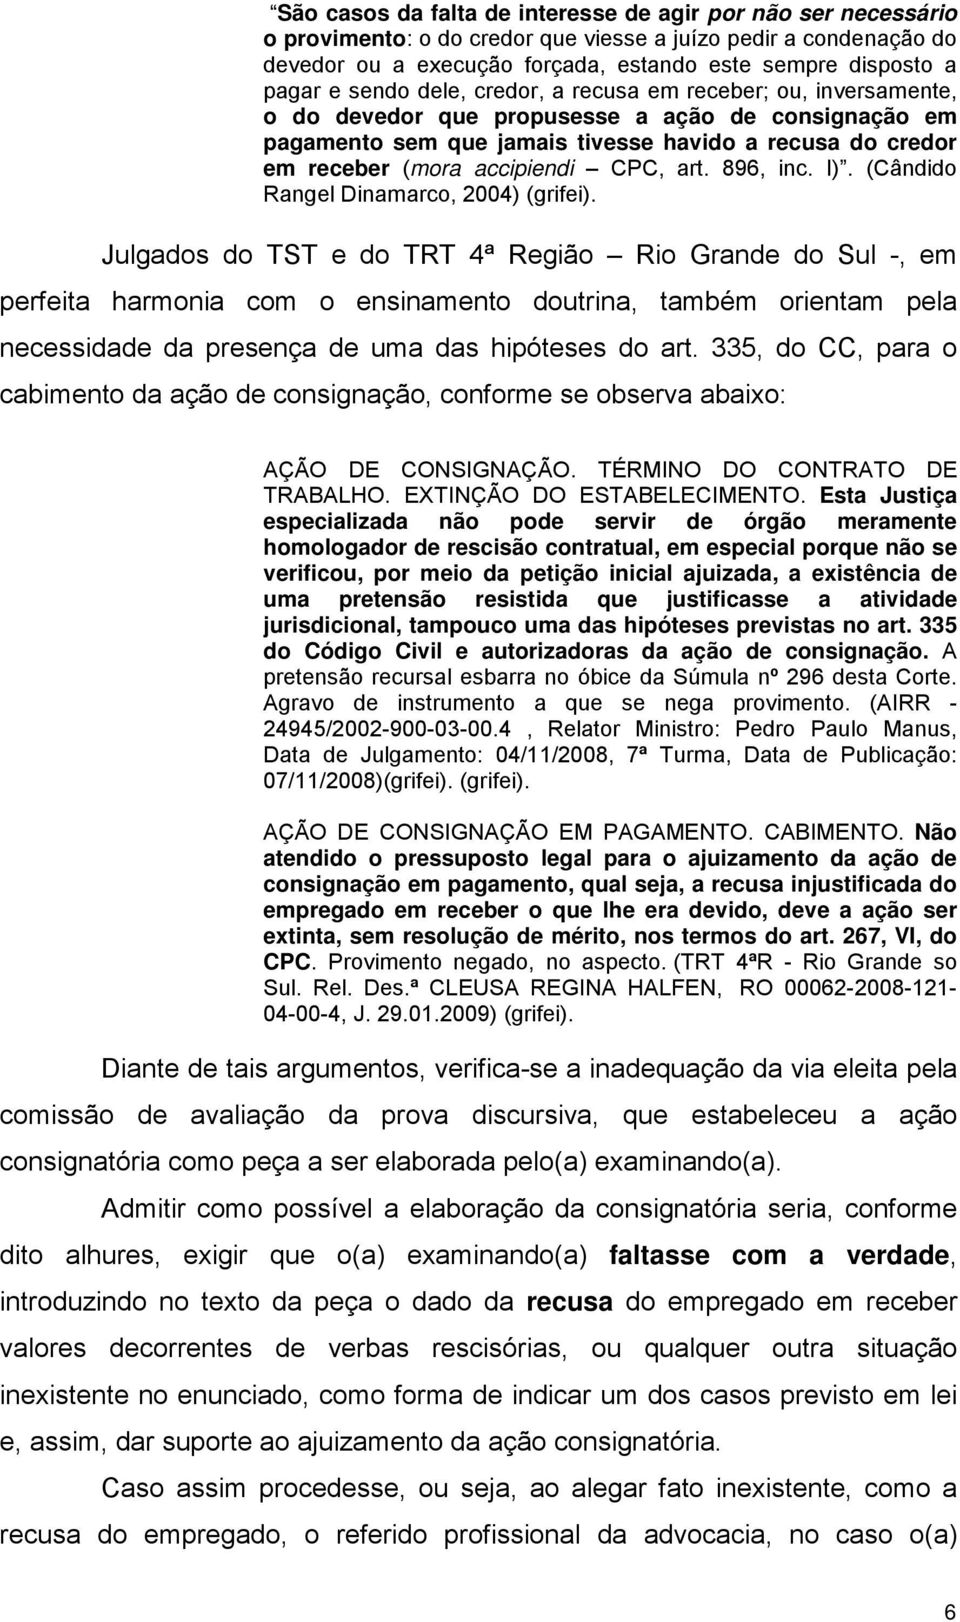 CPC, art. 896, inc. I). (Cândido Rangel Dinamarco, 2004) (grifei).